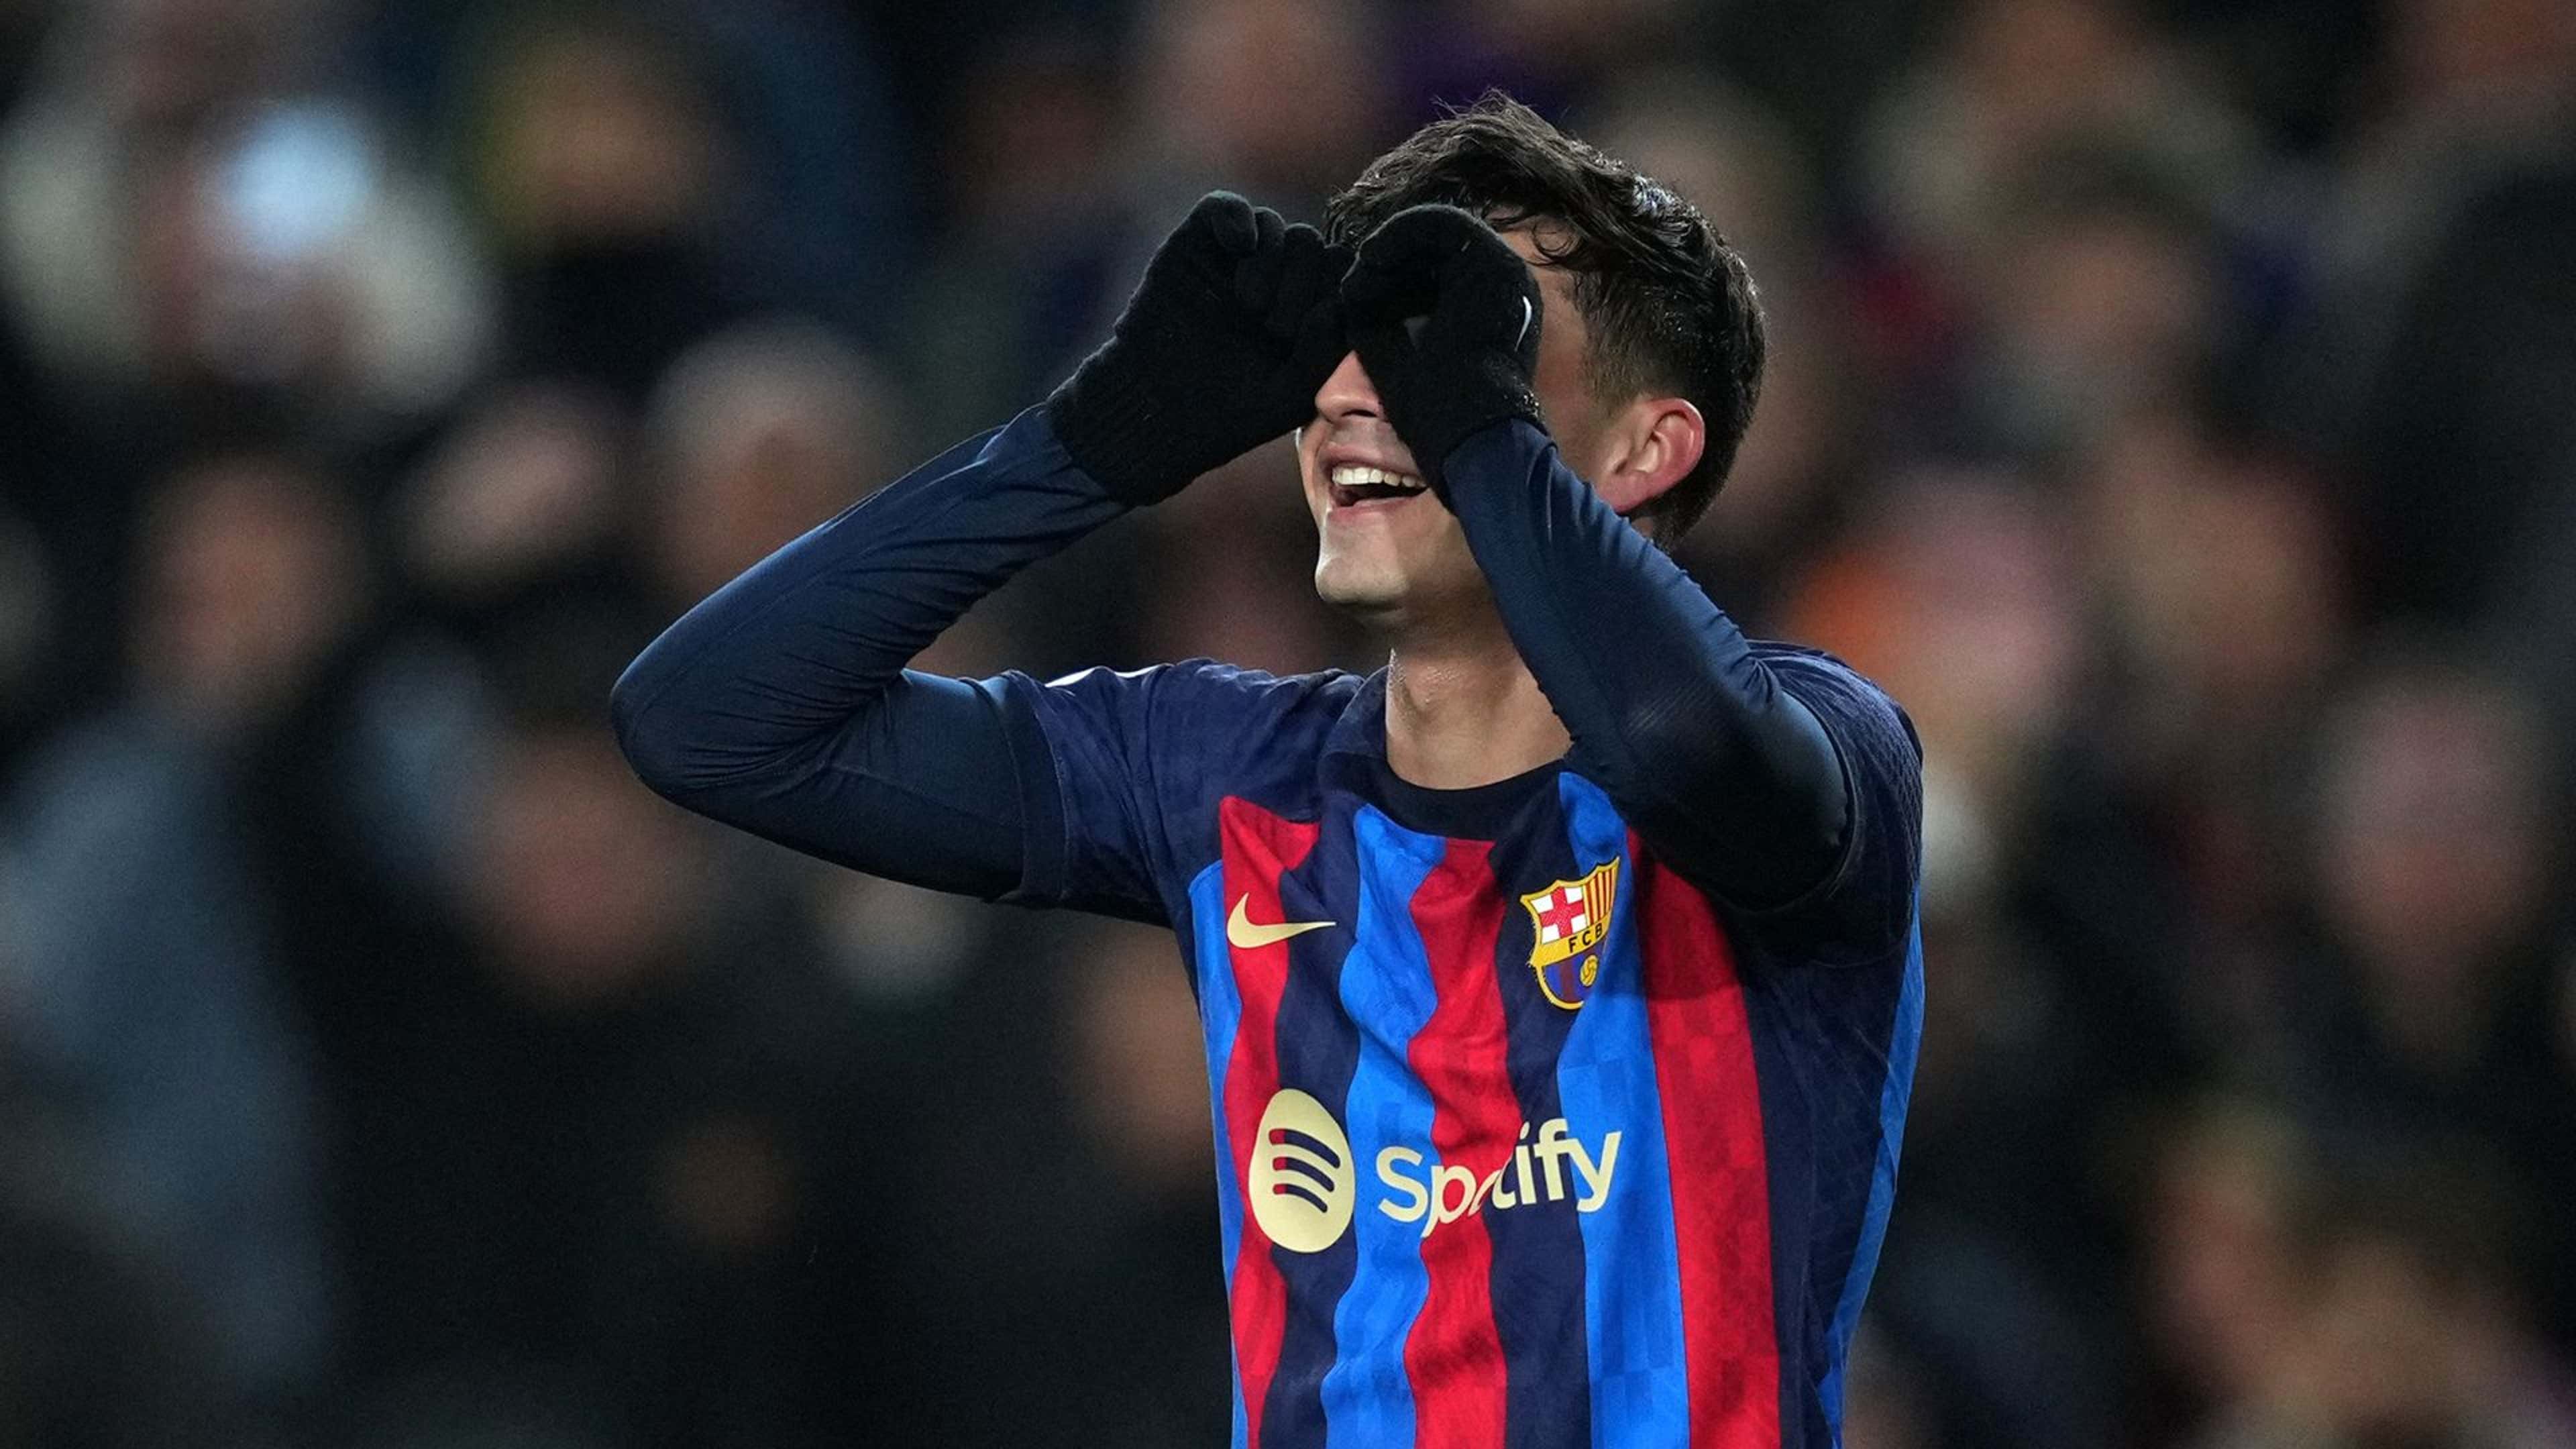 Explained: Barcelona star Pedri's glasses celebration & what it means